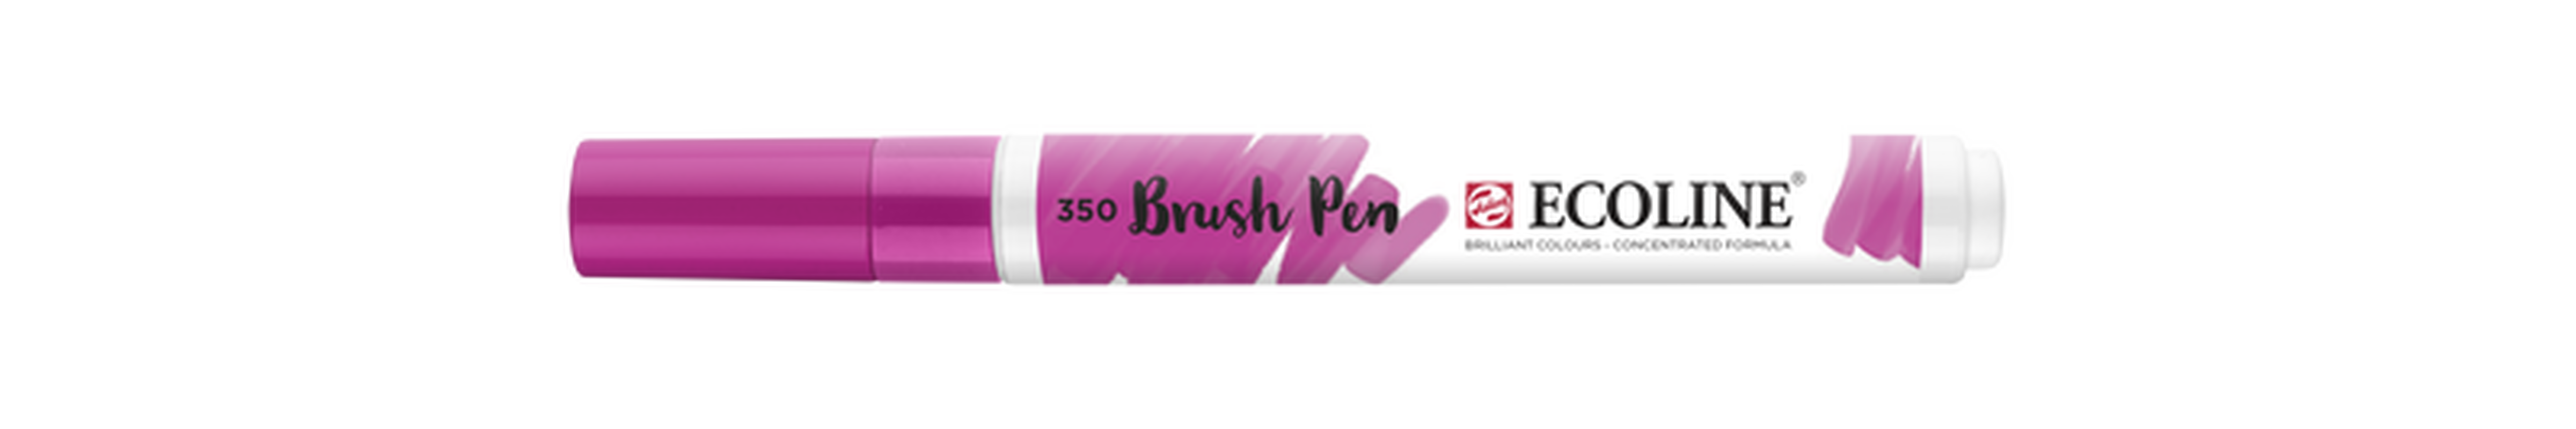 Talens Brush Pen Ecoline Number 350 Color Fuchsia